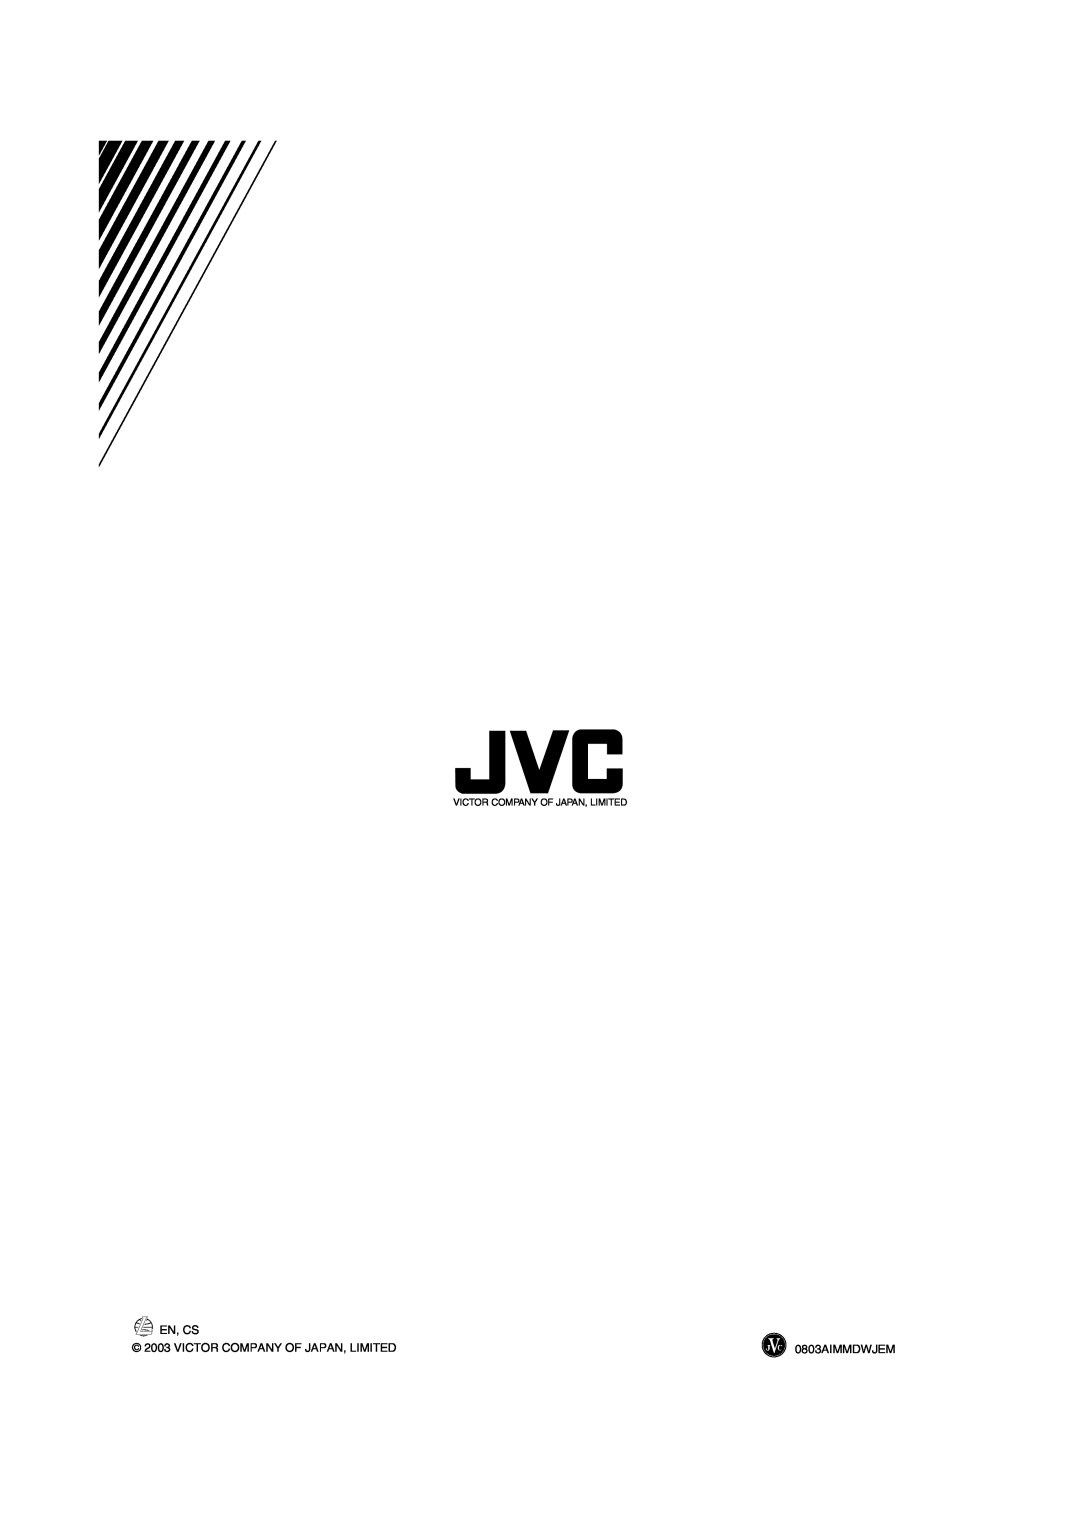 JVC 0803AIMMDWJEM, CA-UXJ55MD, GVT0104-002A manual En, Cs, Victor Company Of Japan, Limited 